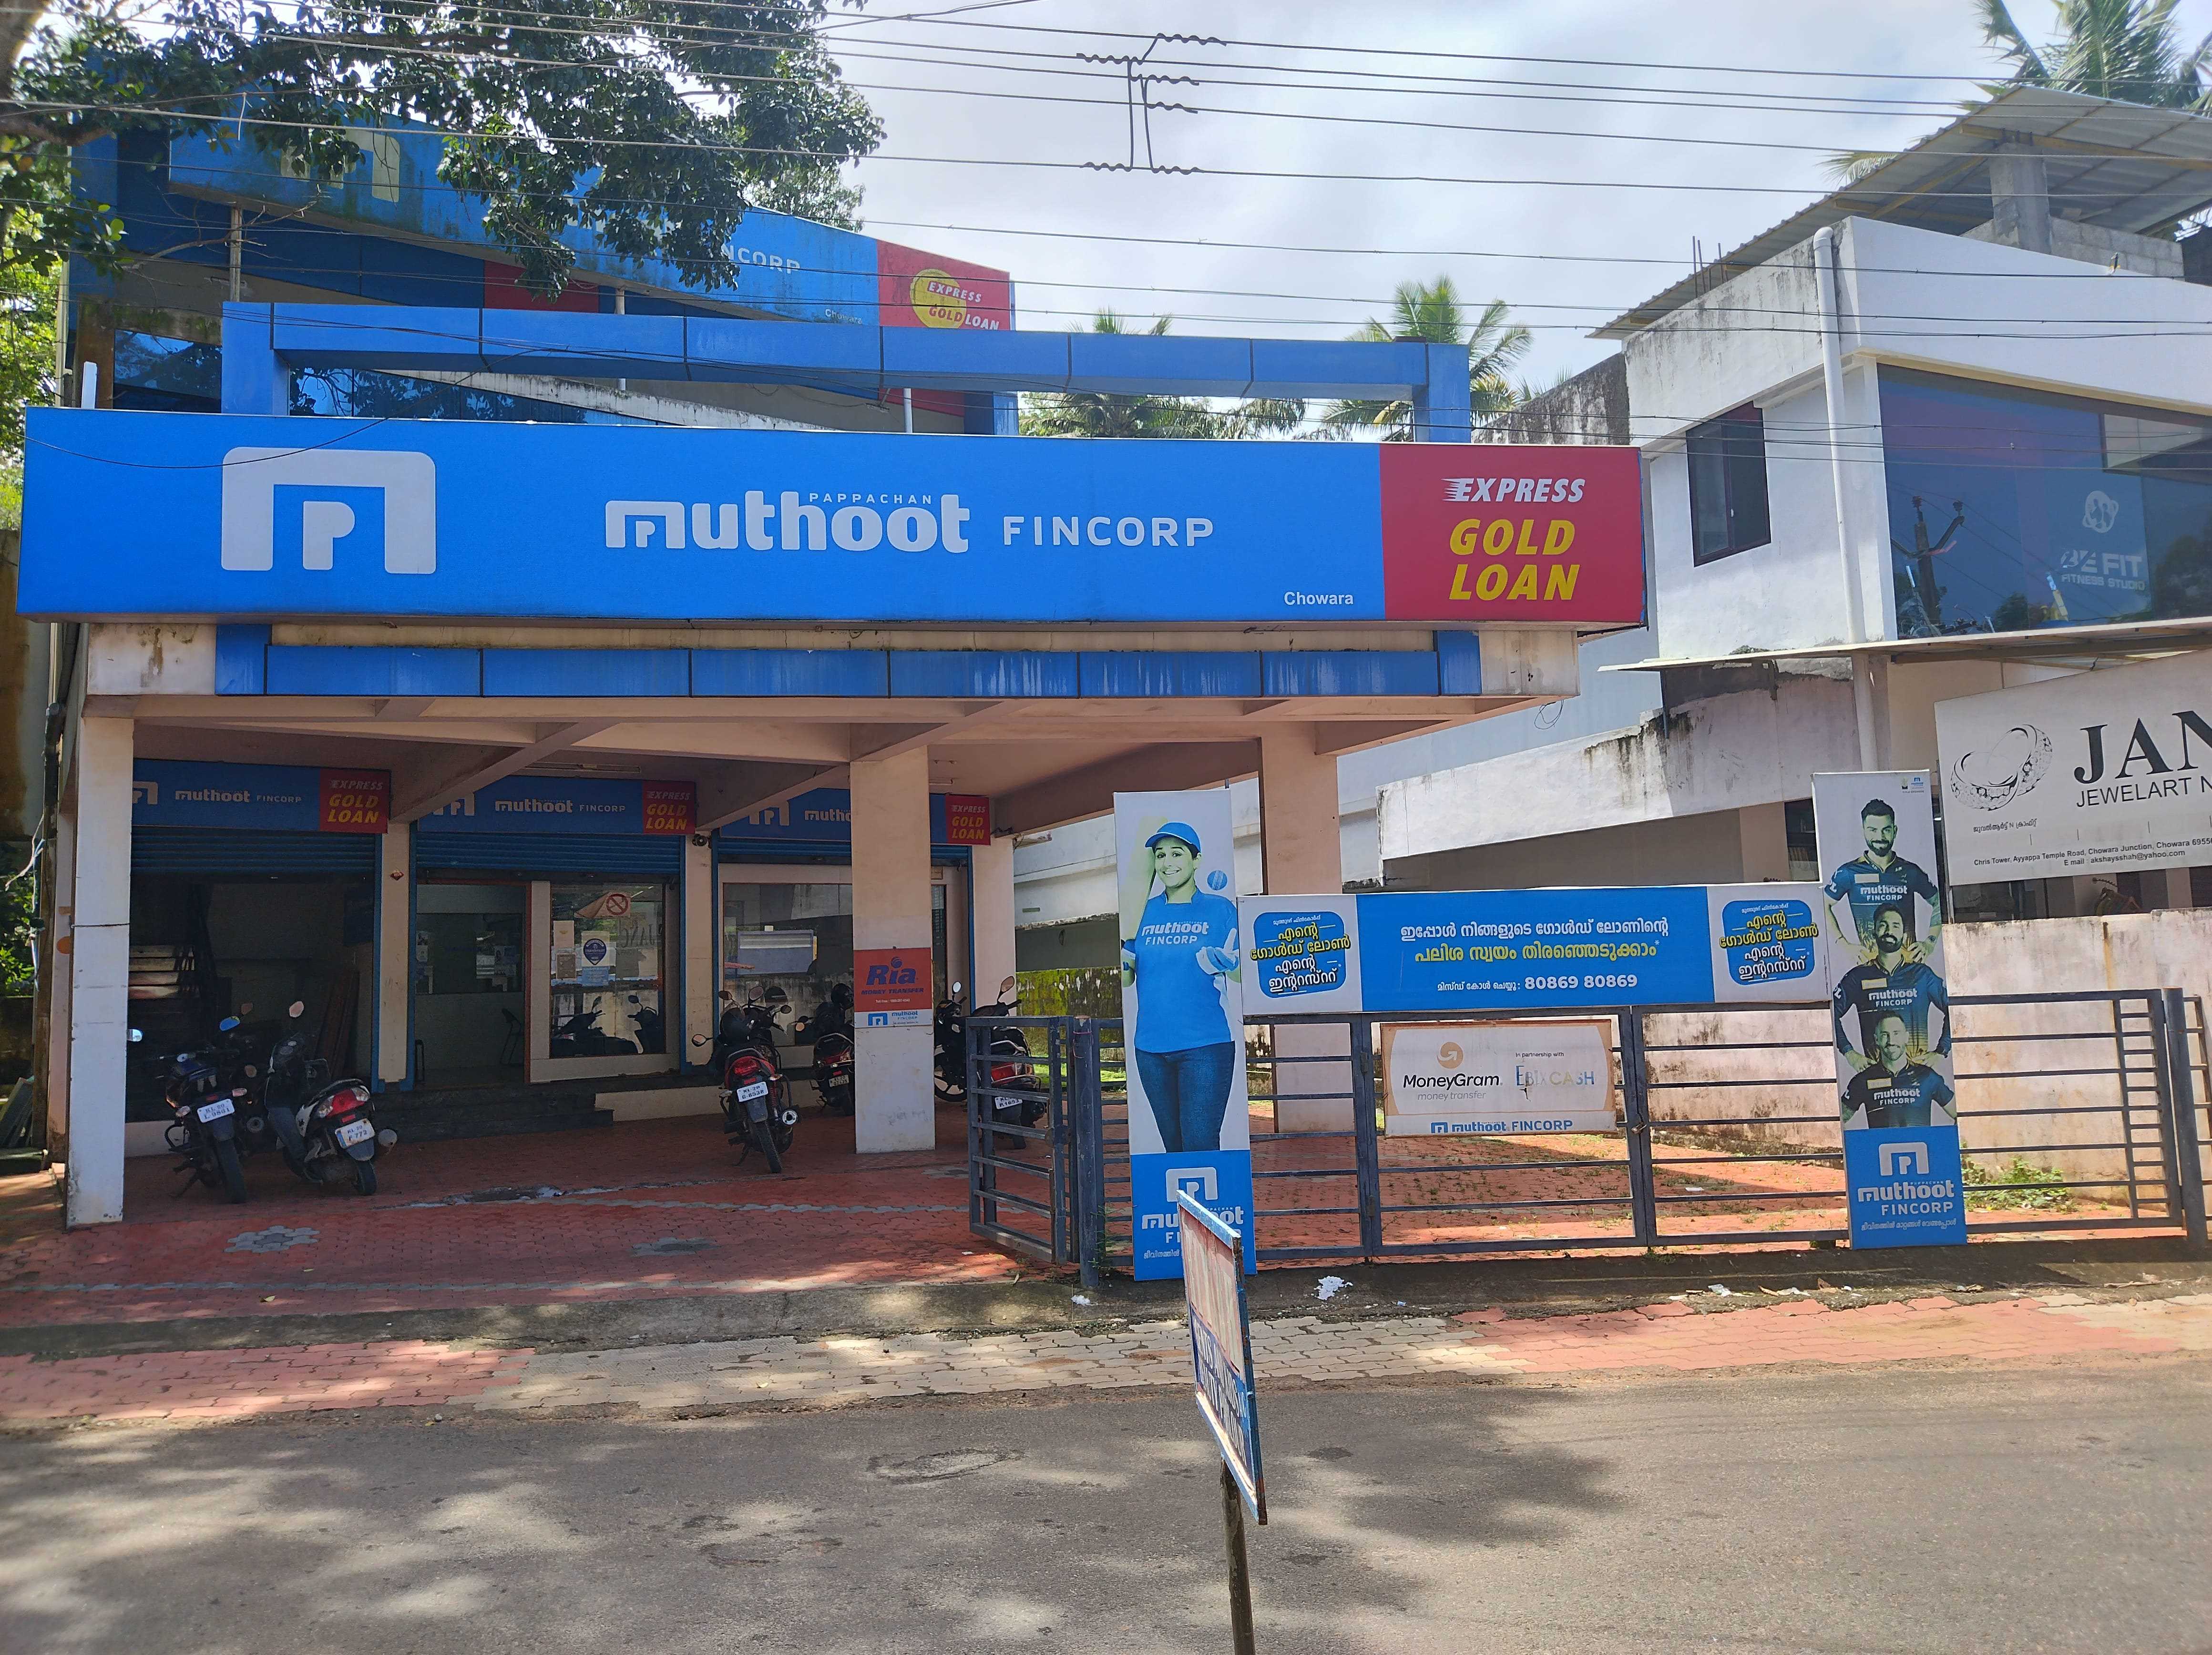 Muthoot Fincorp Gold Loan Services in Chowara, Thiruvananthapuram, Kerala